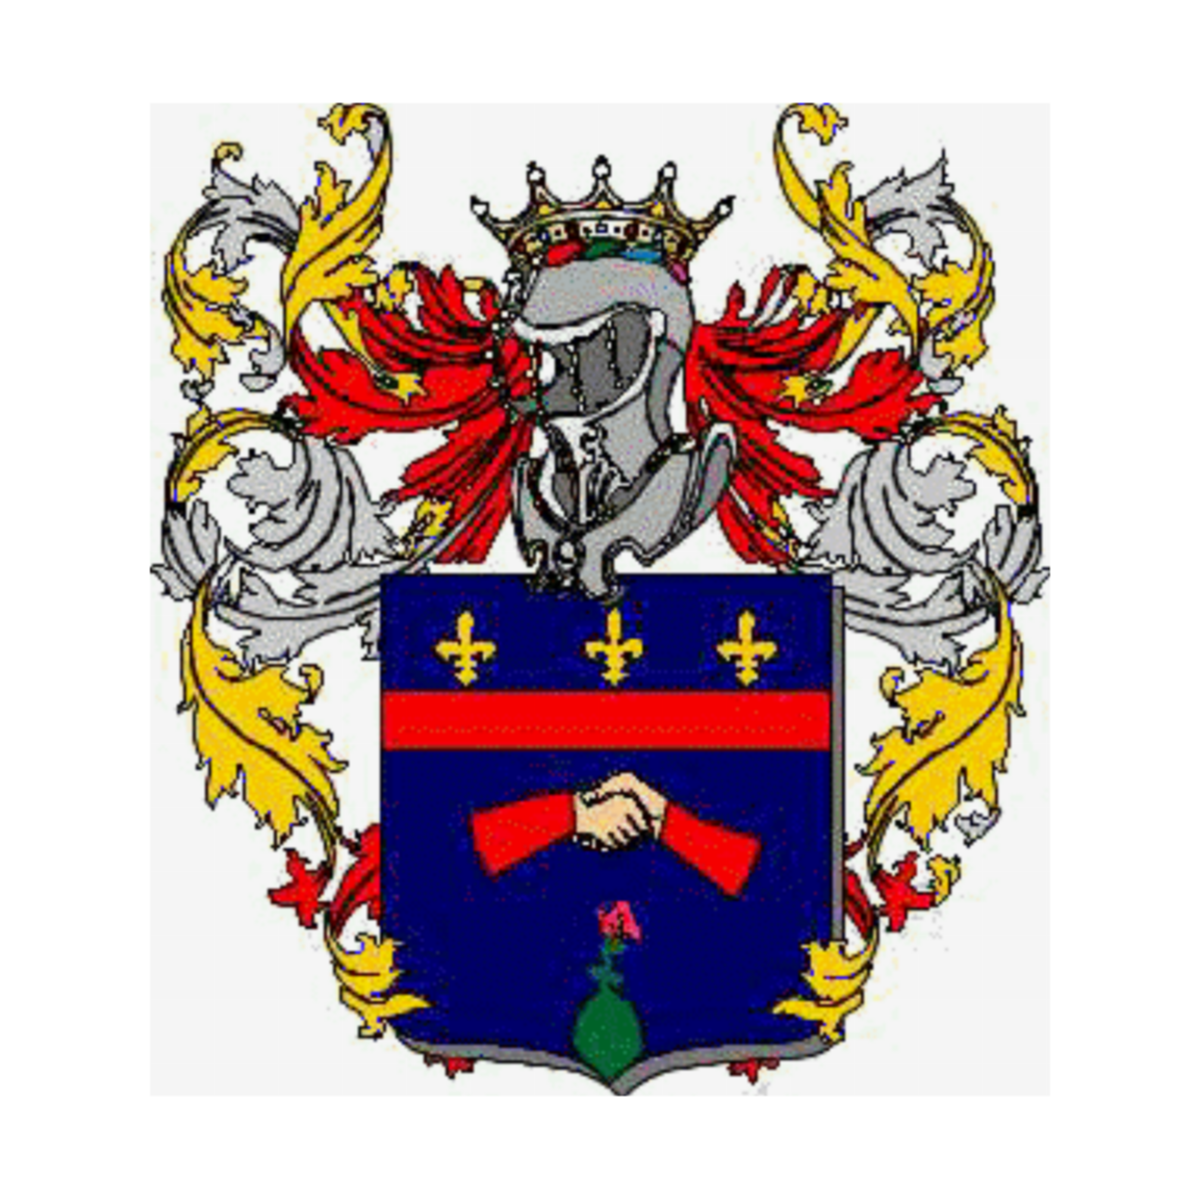 Coat of arms of familyvarie famiglie, Ligata,Ligati